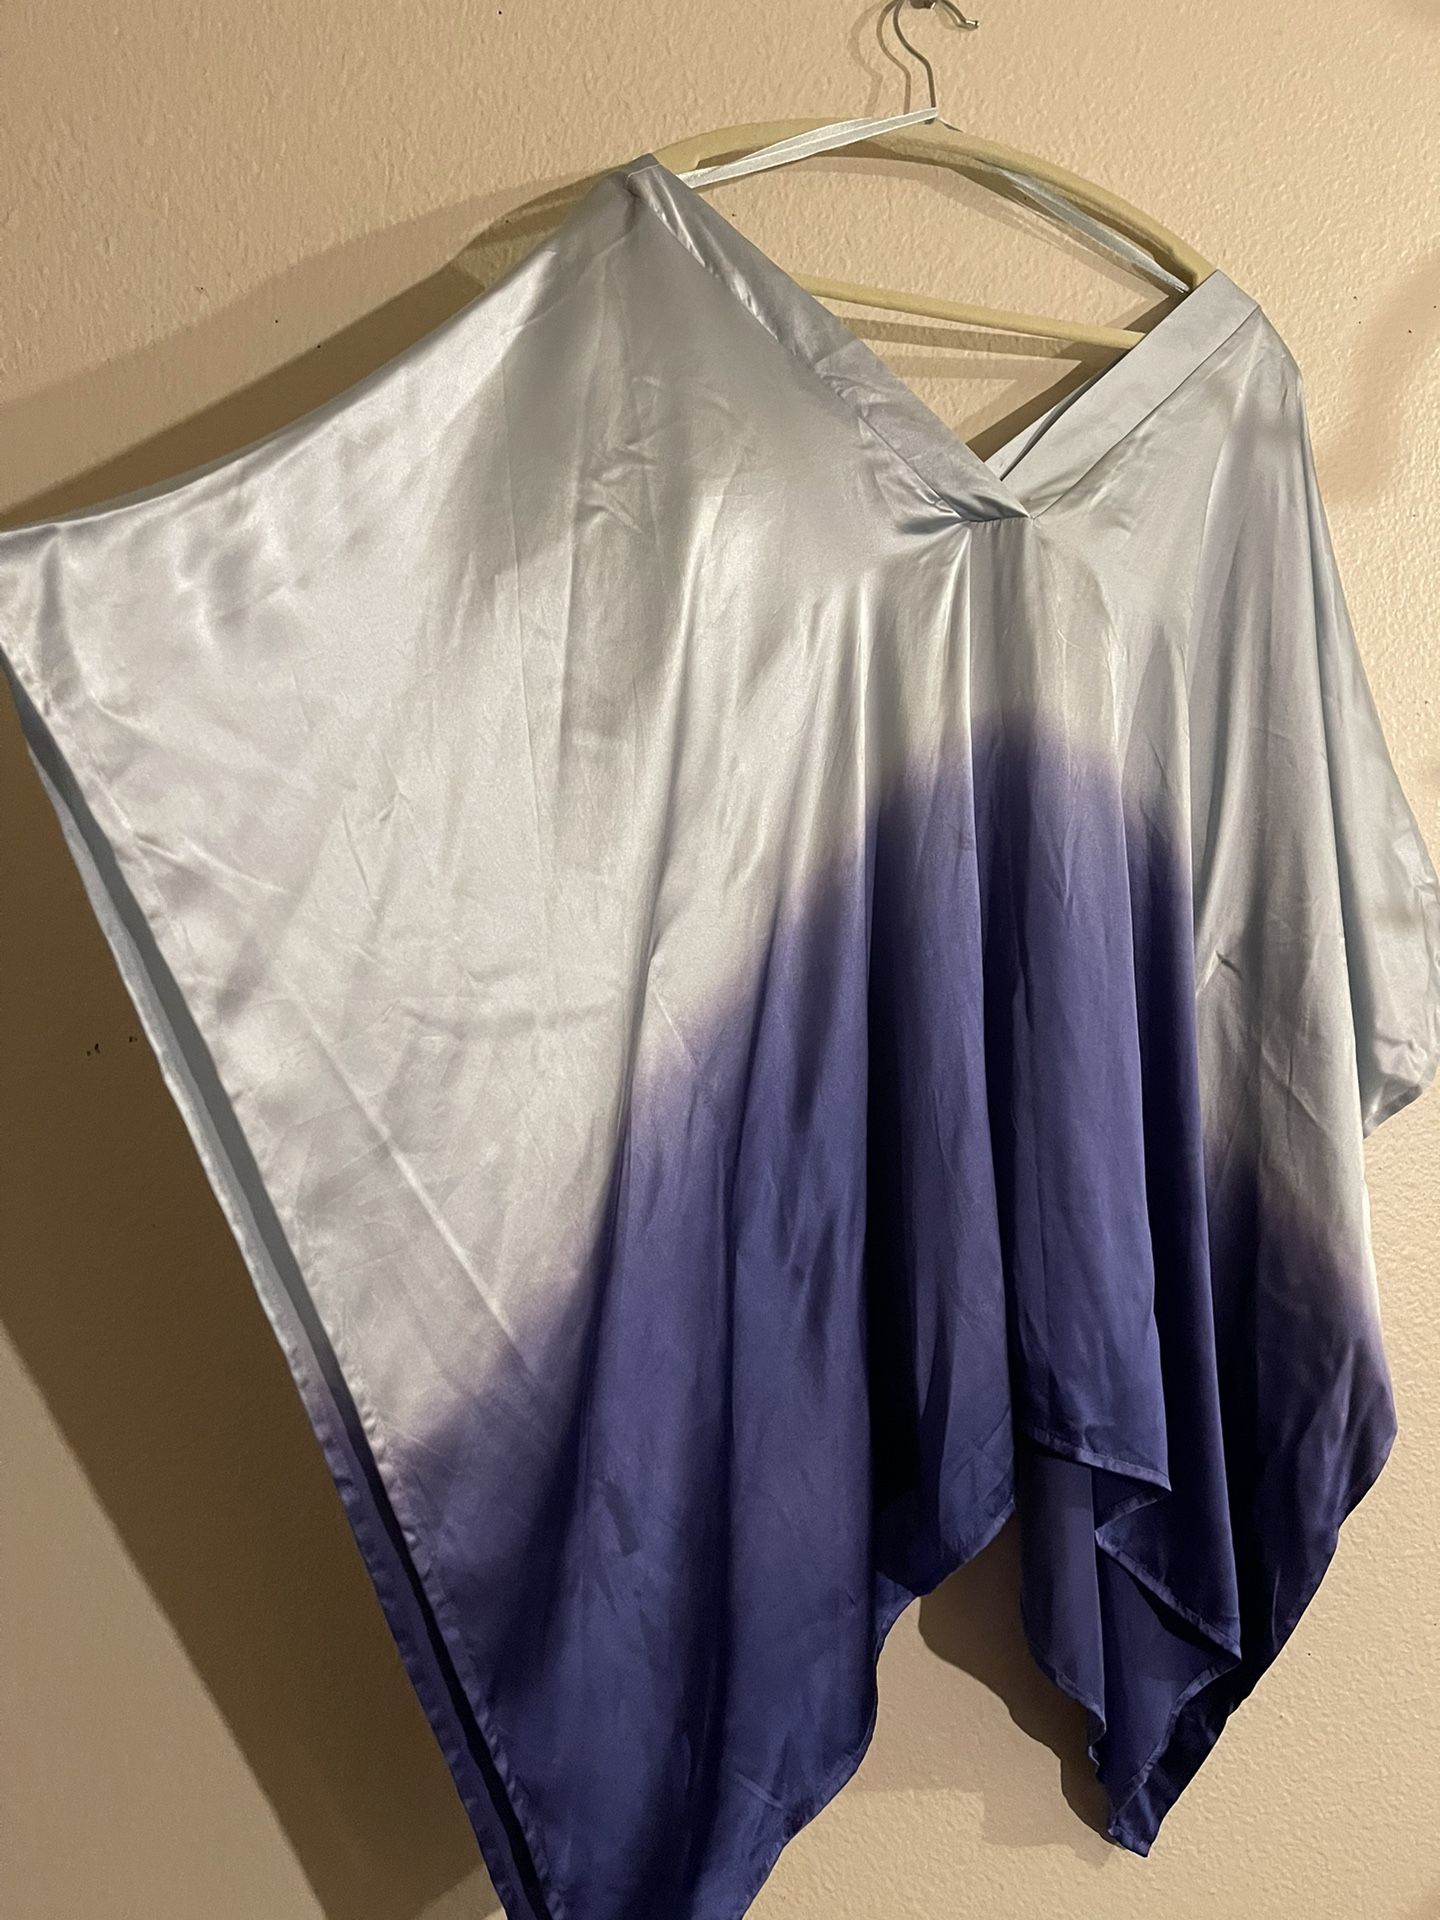 Brand New 100% Silk Poncho Layer Dress 